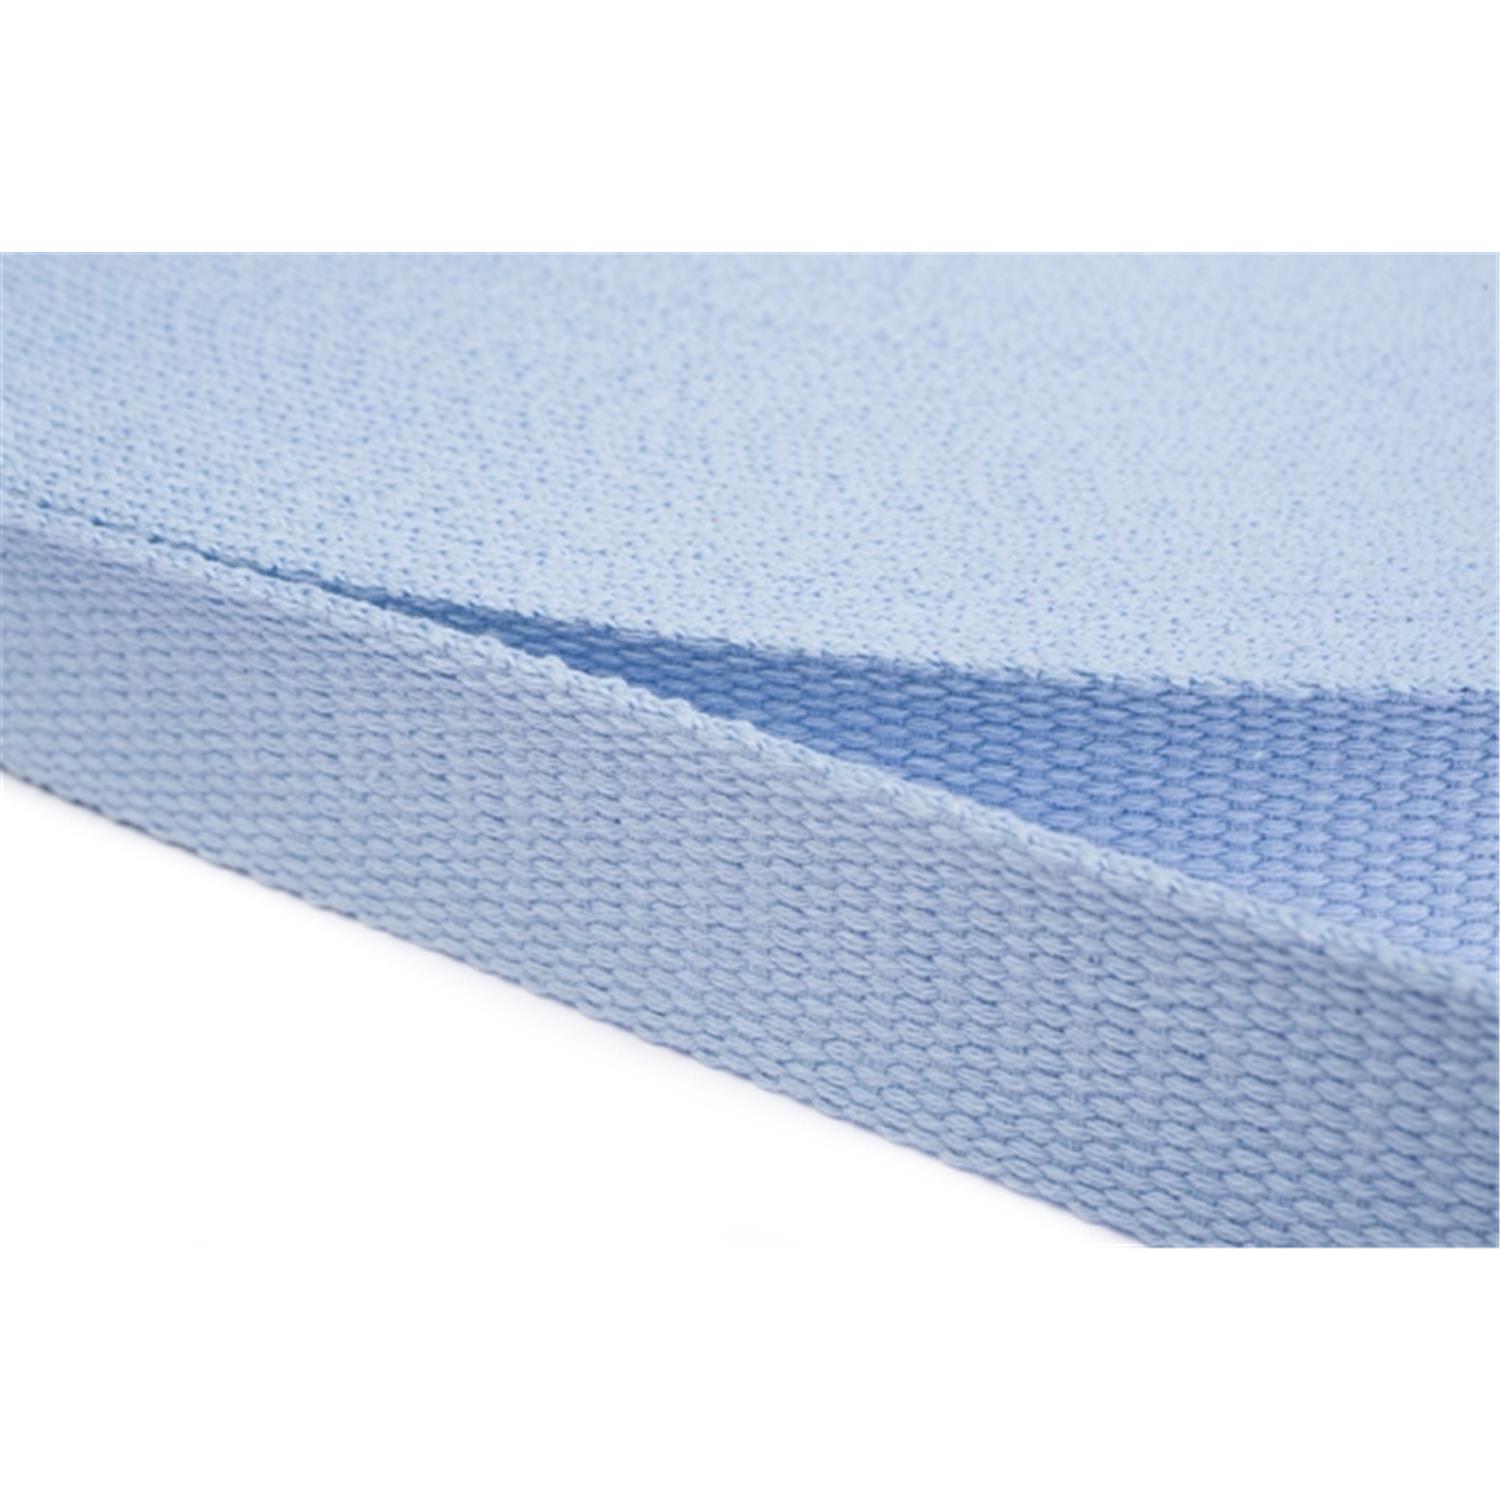 Gurtband aus Baumwolle 50mm in 20 Farben 11 - hellblau 6 Meter